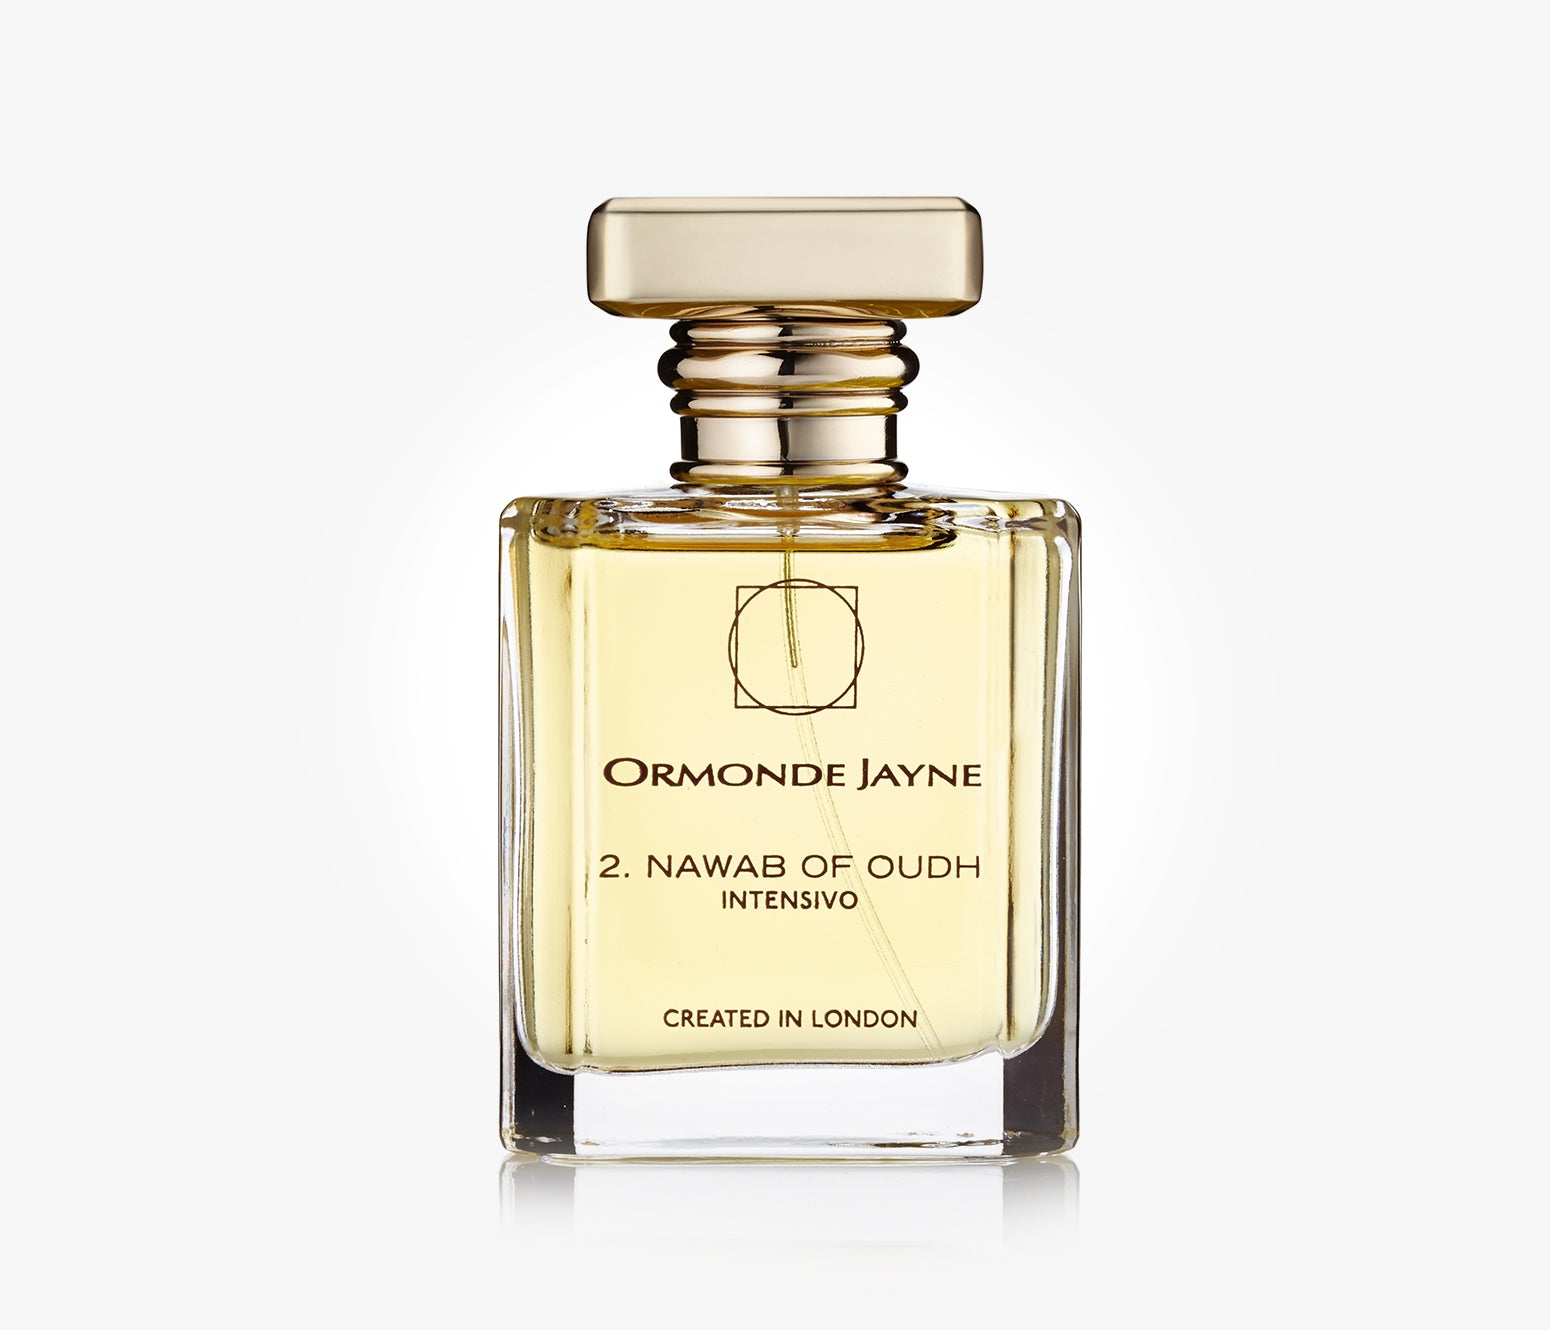 Ormonde Jayne - Nawab of Oud - 50ml - SVH001 - Product Image - Fragrance - Les Senteurs